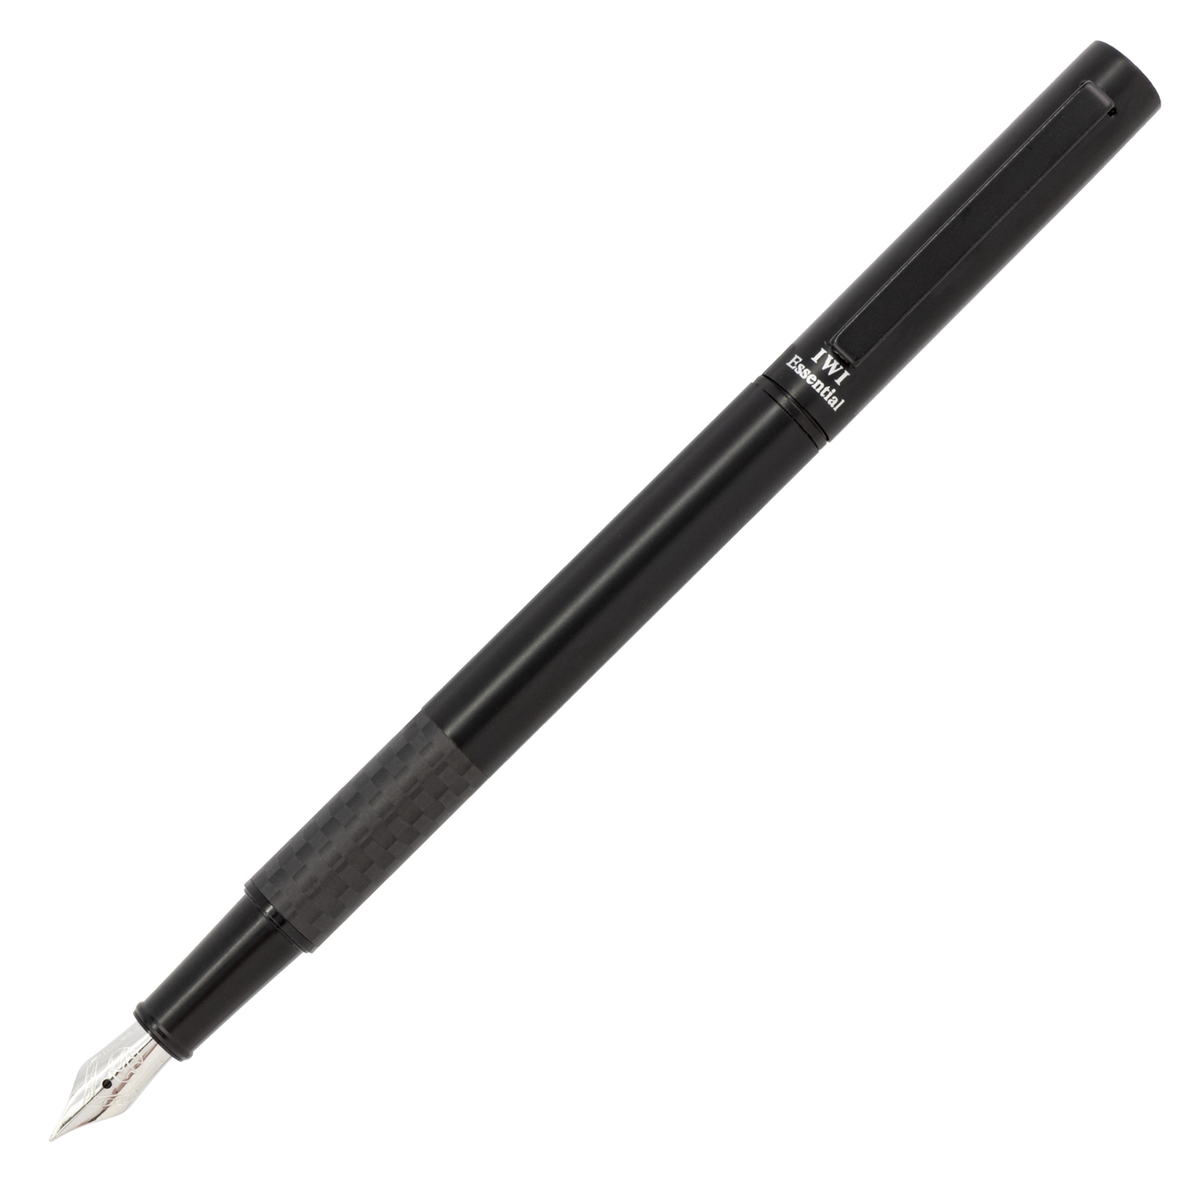 IWI Essential Fountain Pen Black Fiber